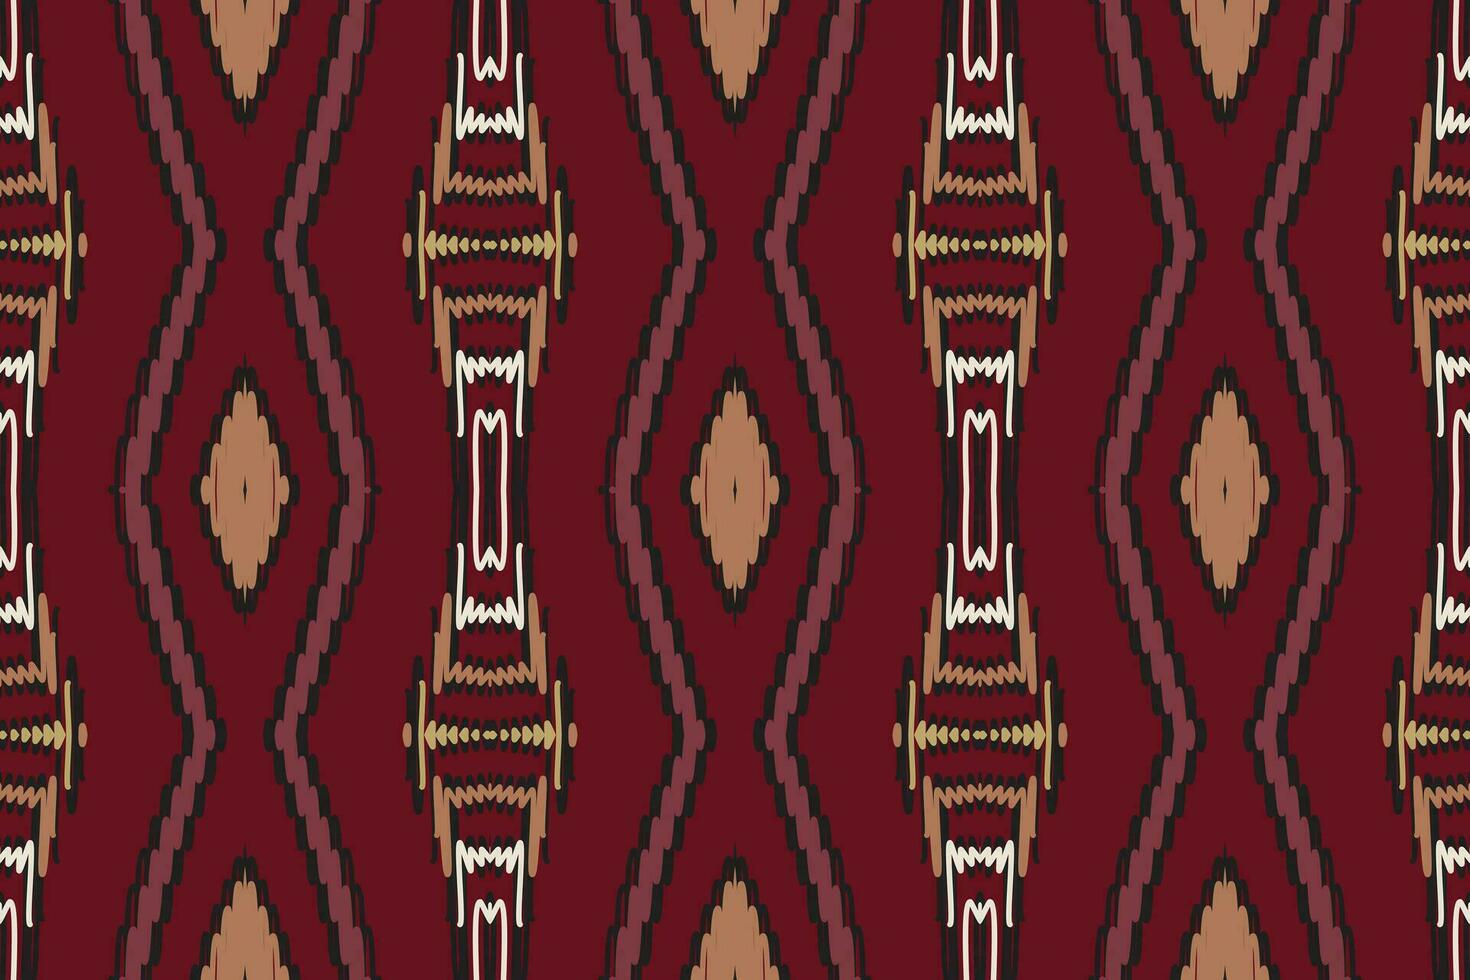 labor de retazos modelo sin costura australiano aborigen modelo motivo bordado, ikat bordado vector diseño para impresión escandinavo modelo sari étnico natividad gitano modelo